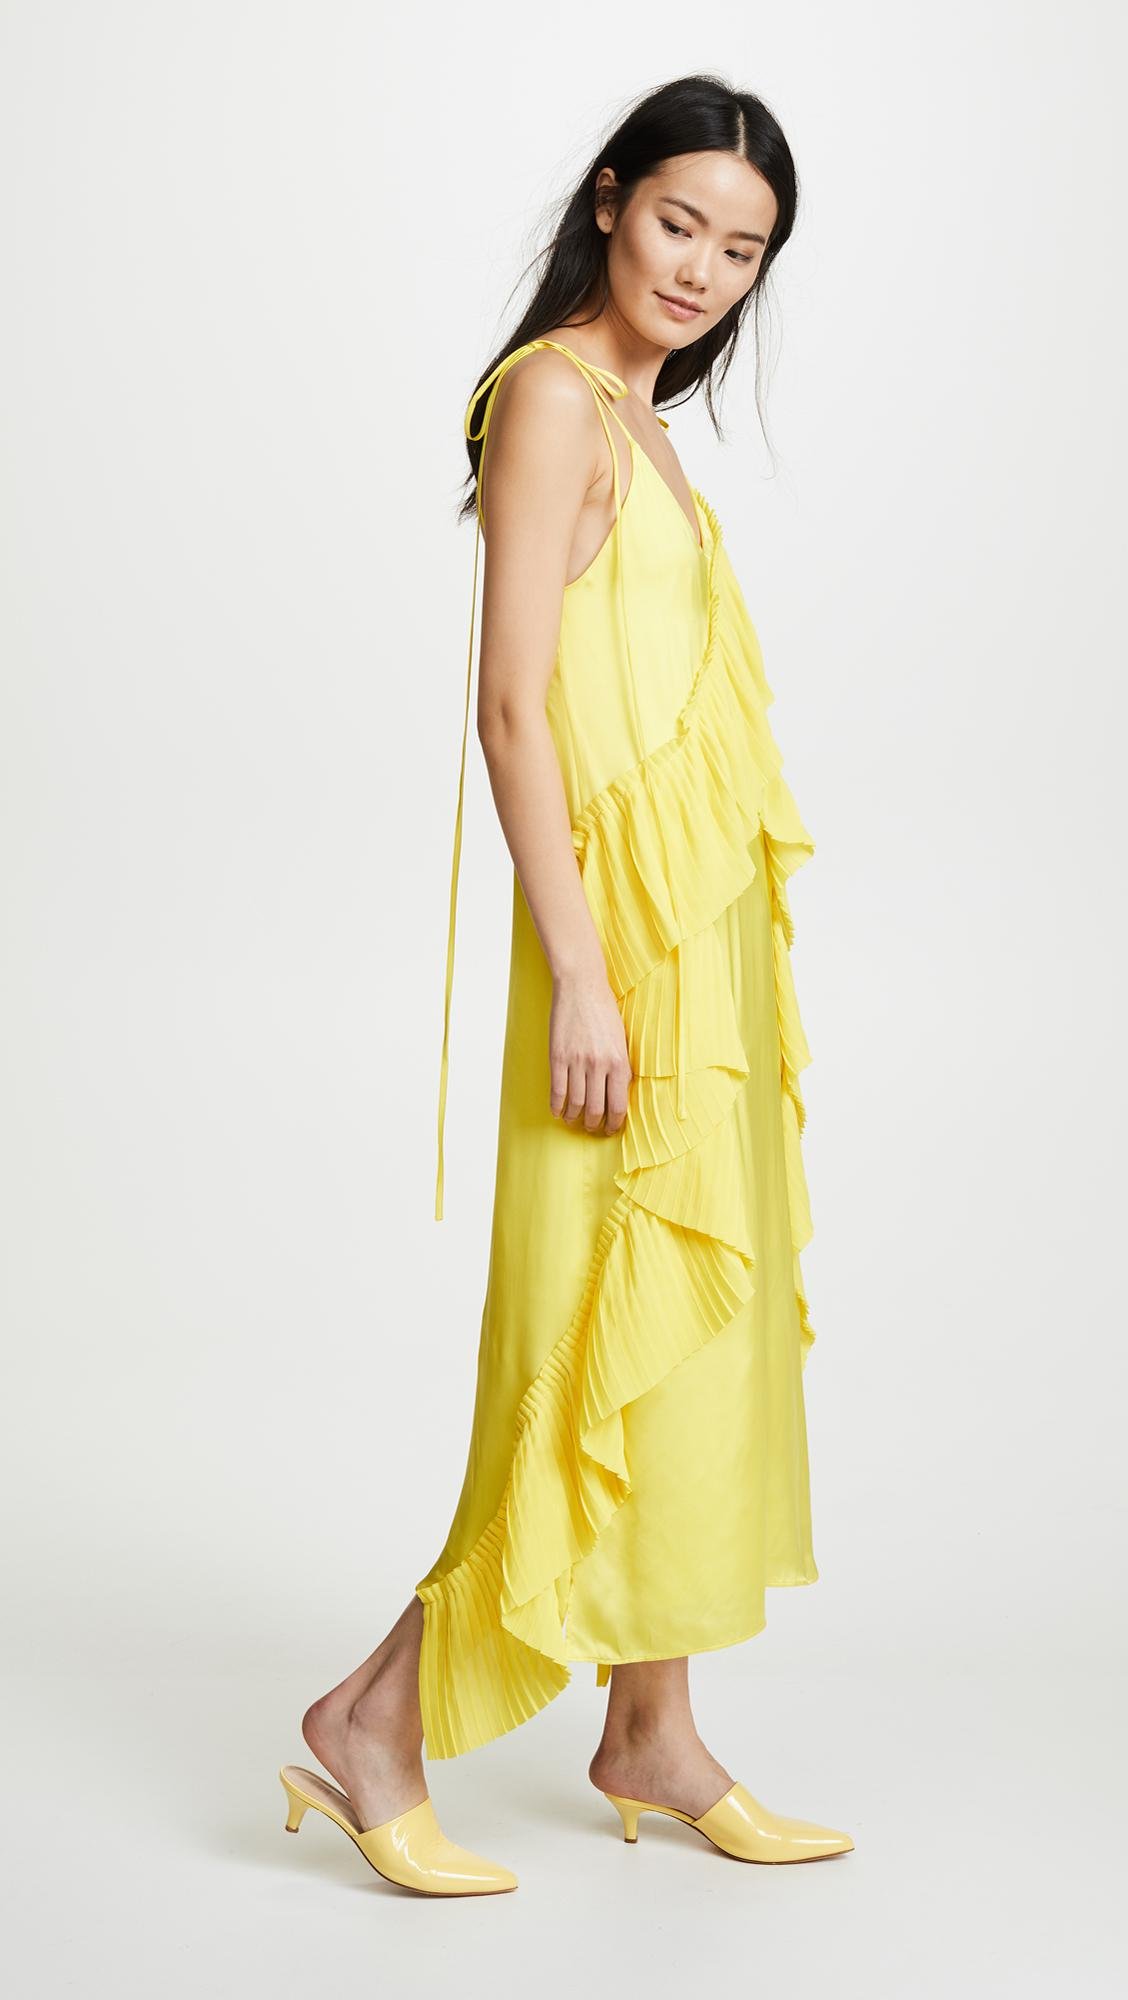 kenzo yellow dress